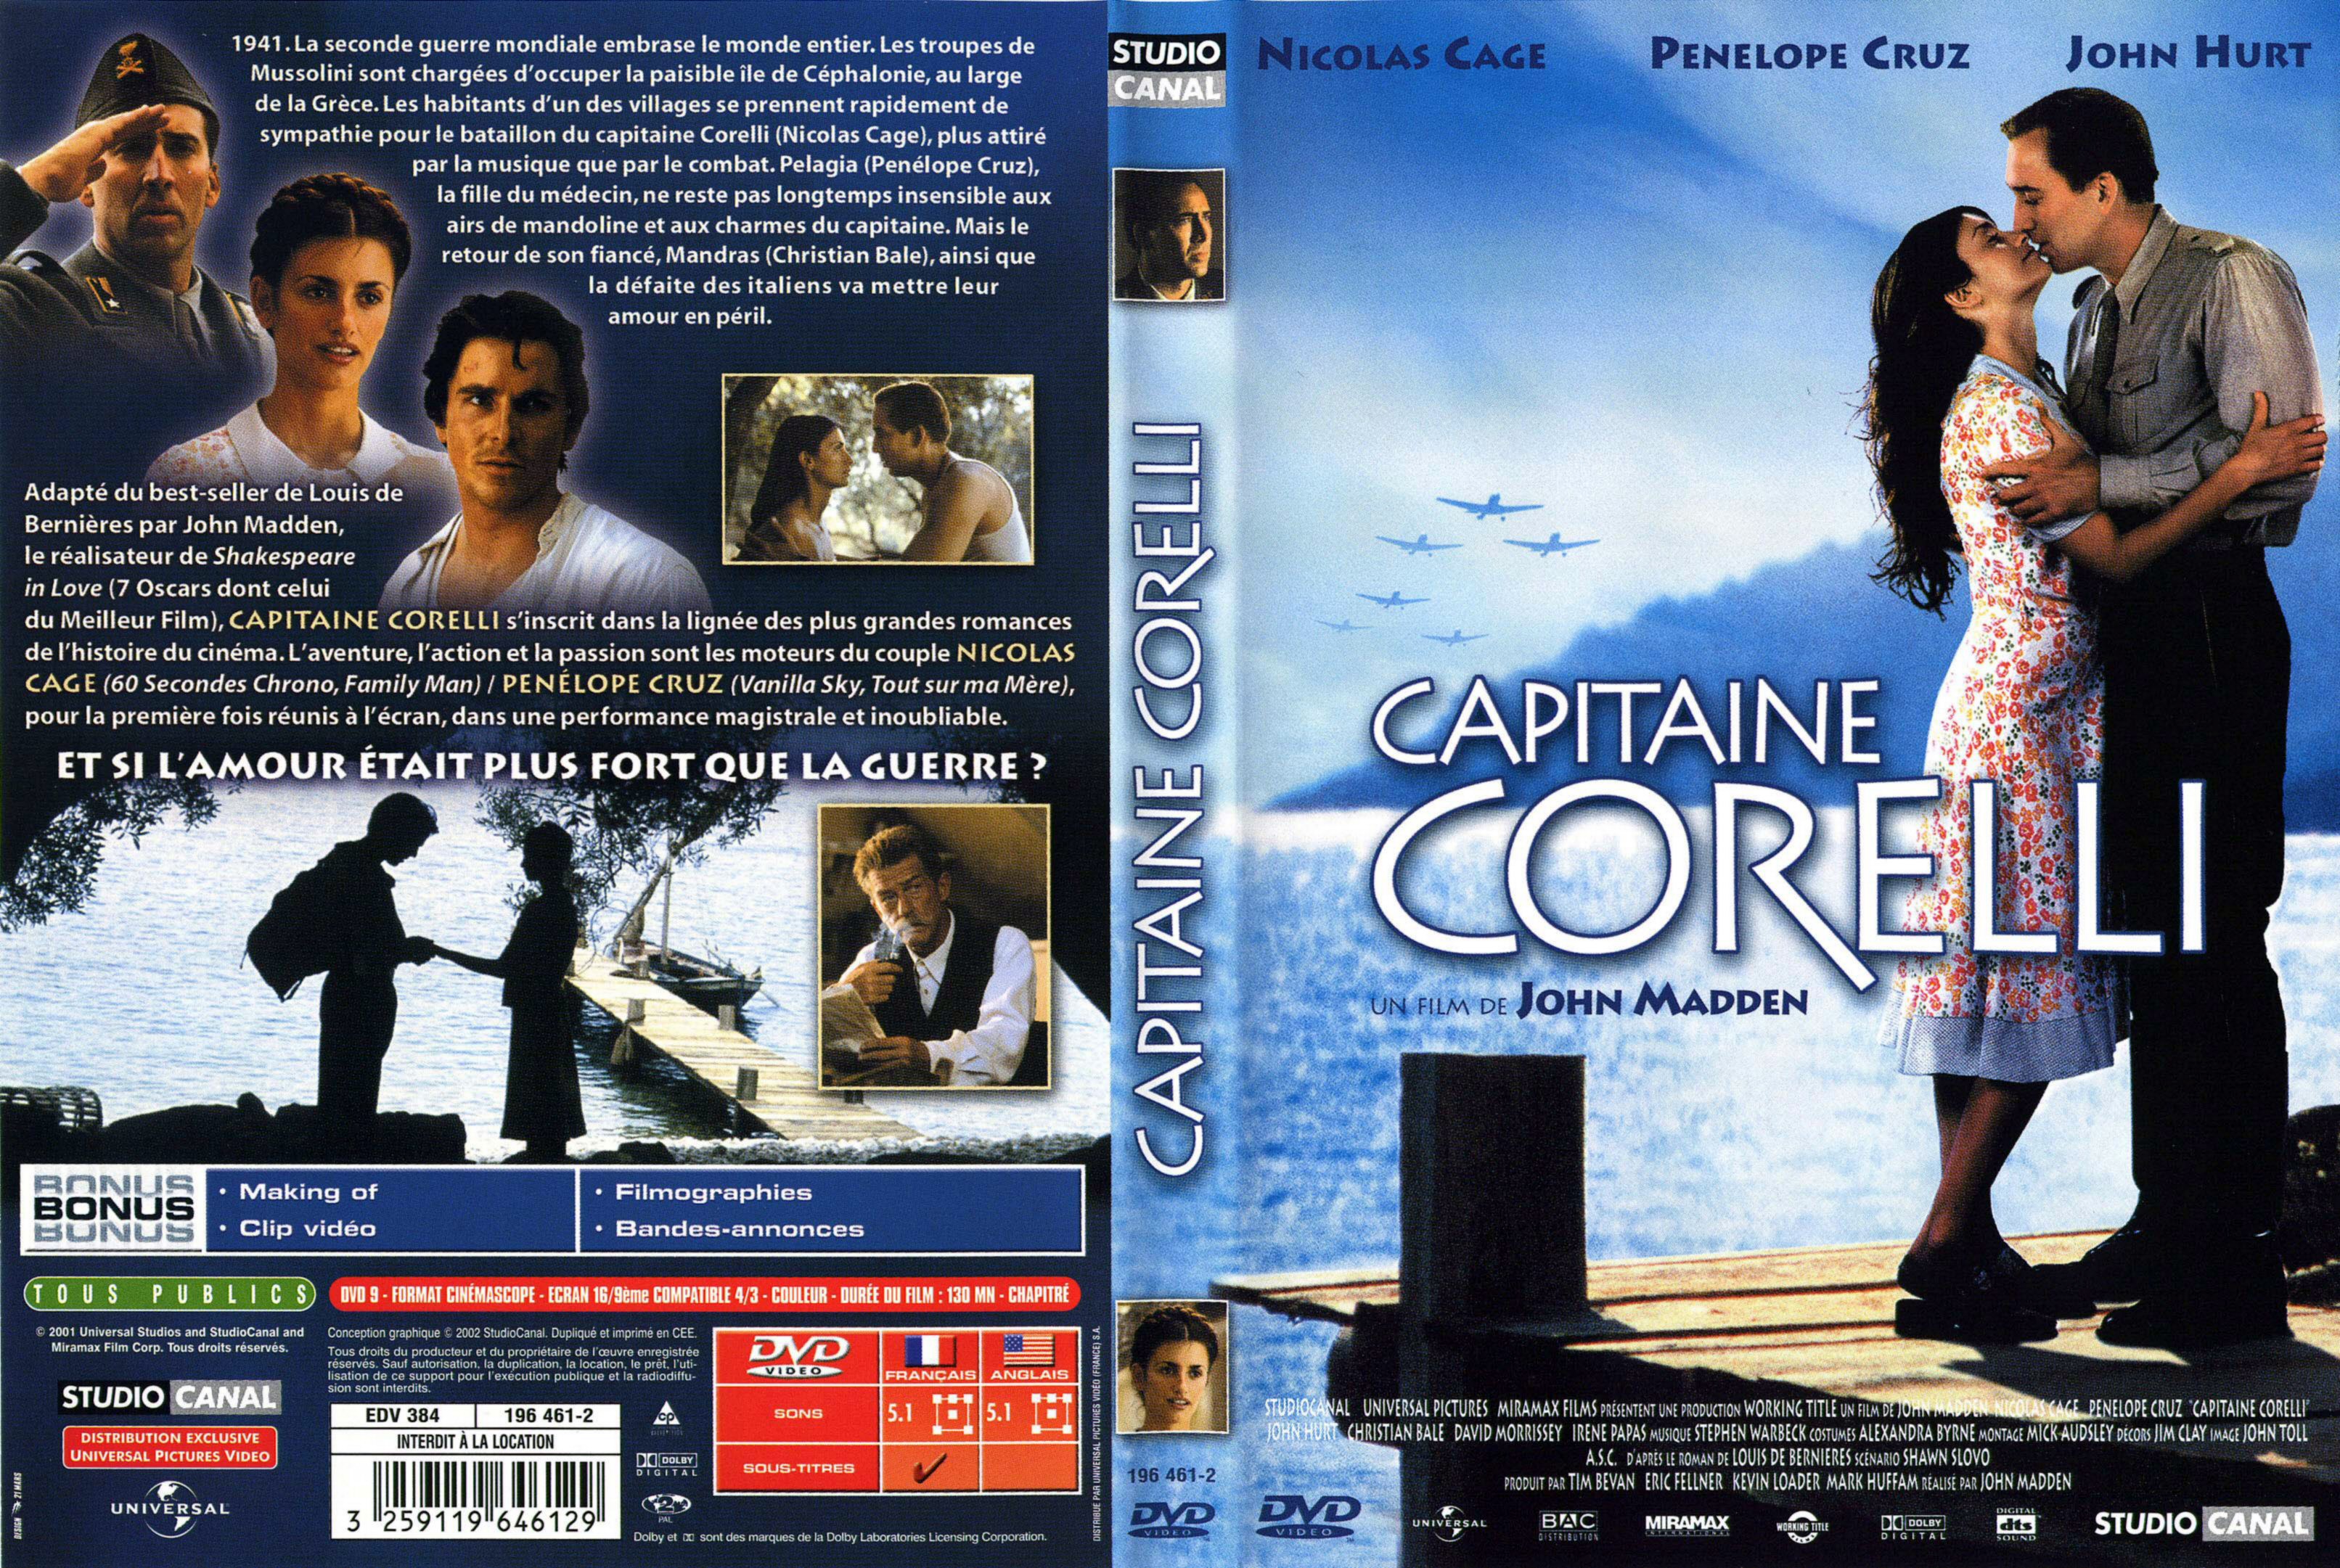 Jaquette DVD Capitaine corelli